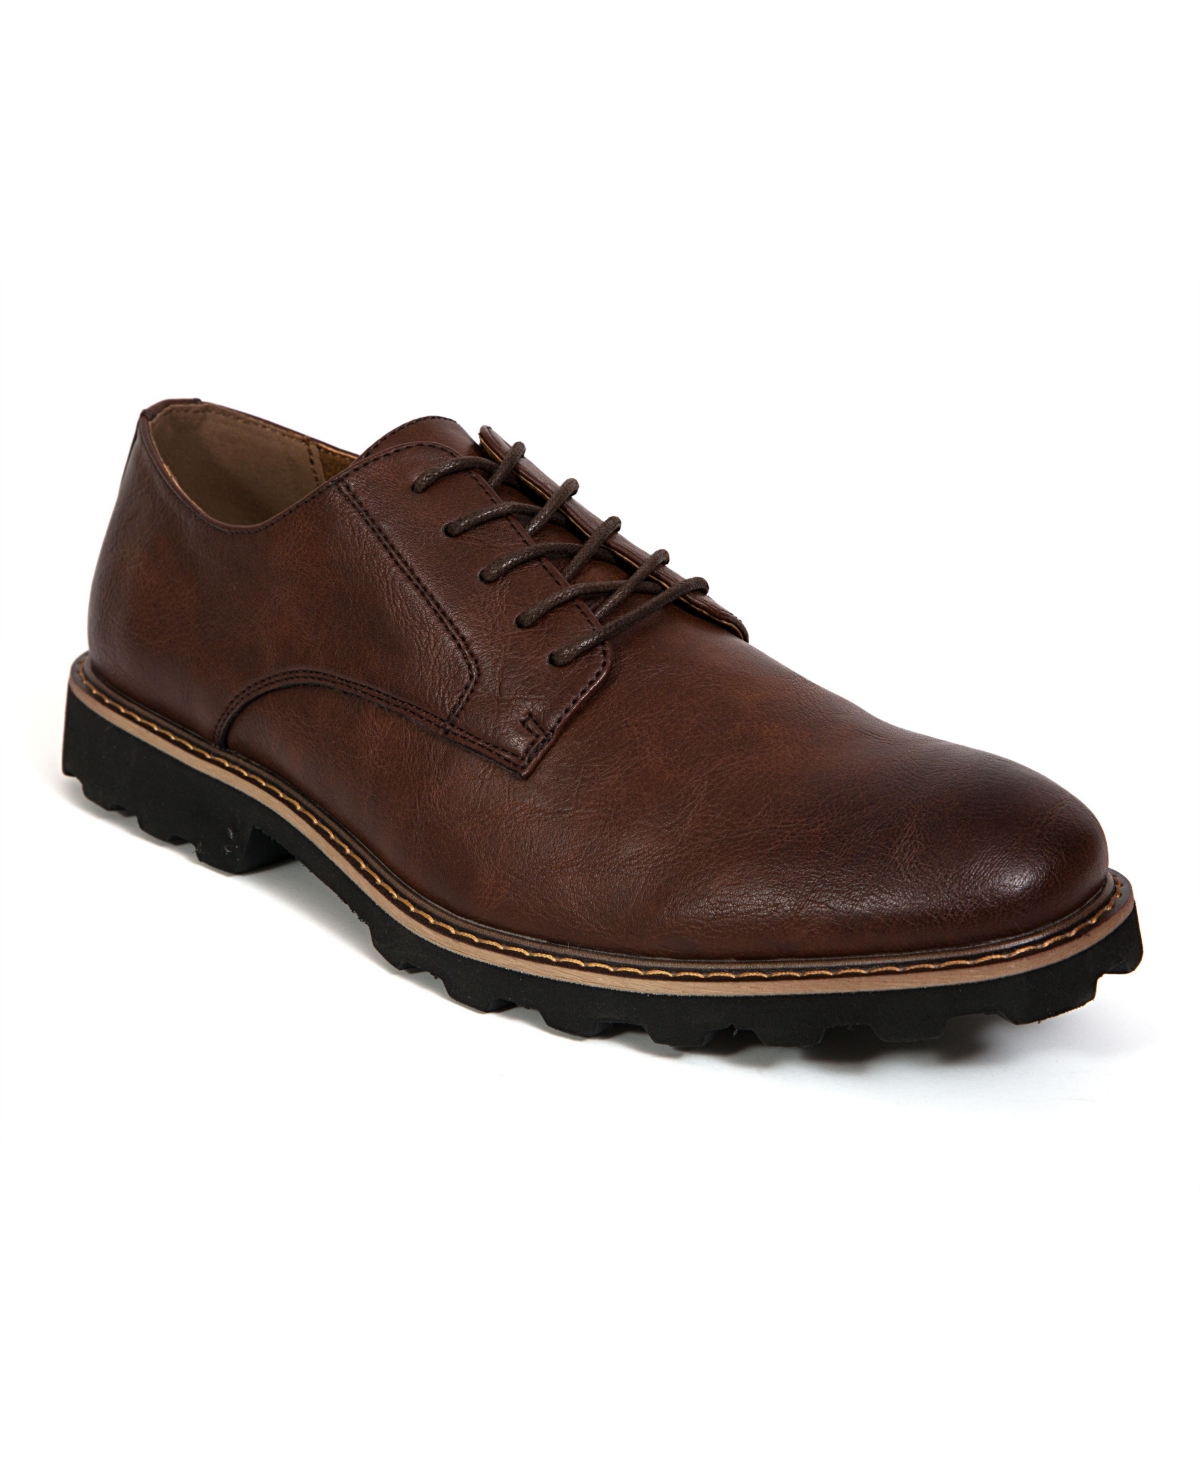 Men's Benjamin Dress Comfort Oxford Shoes - Brown